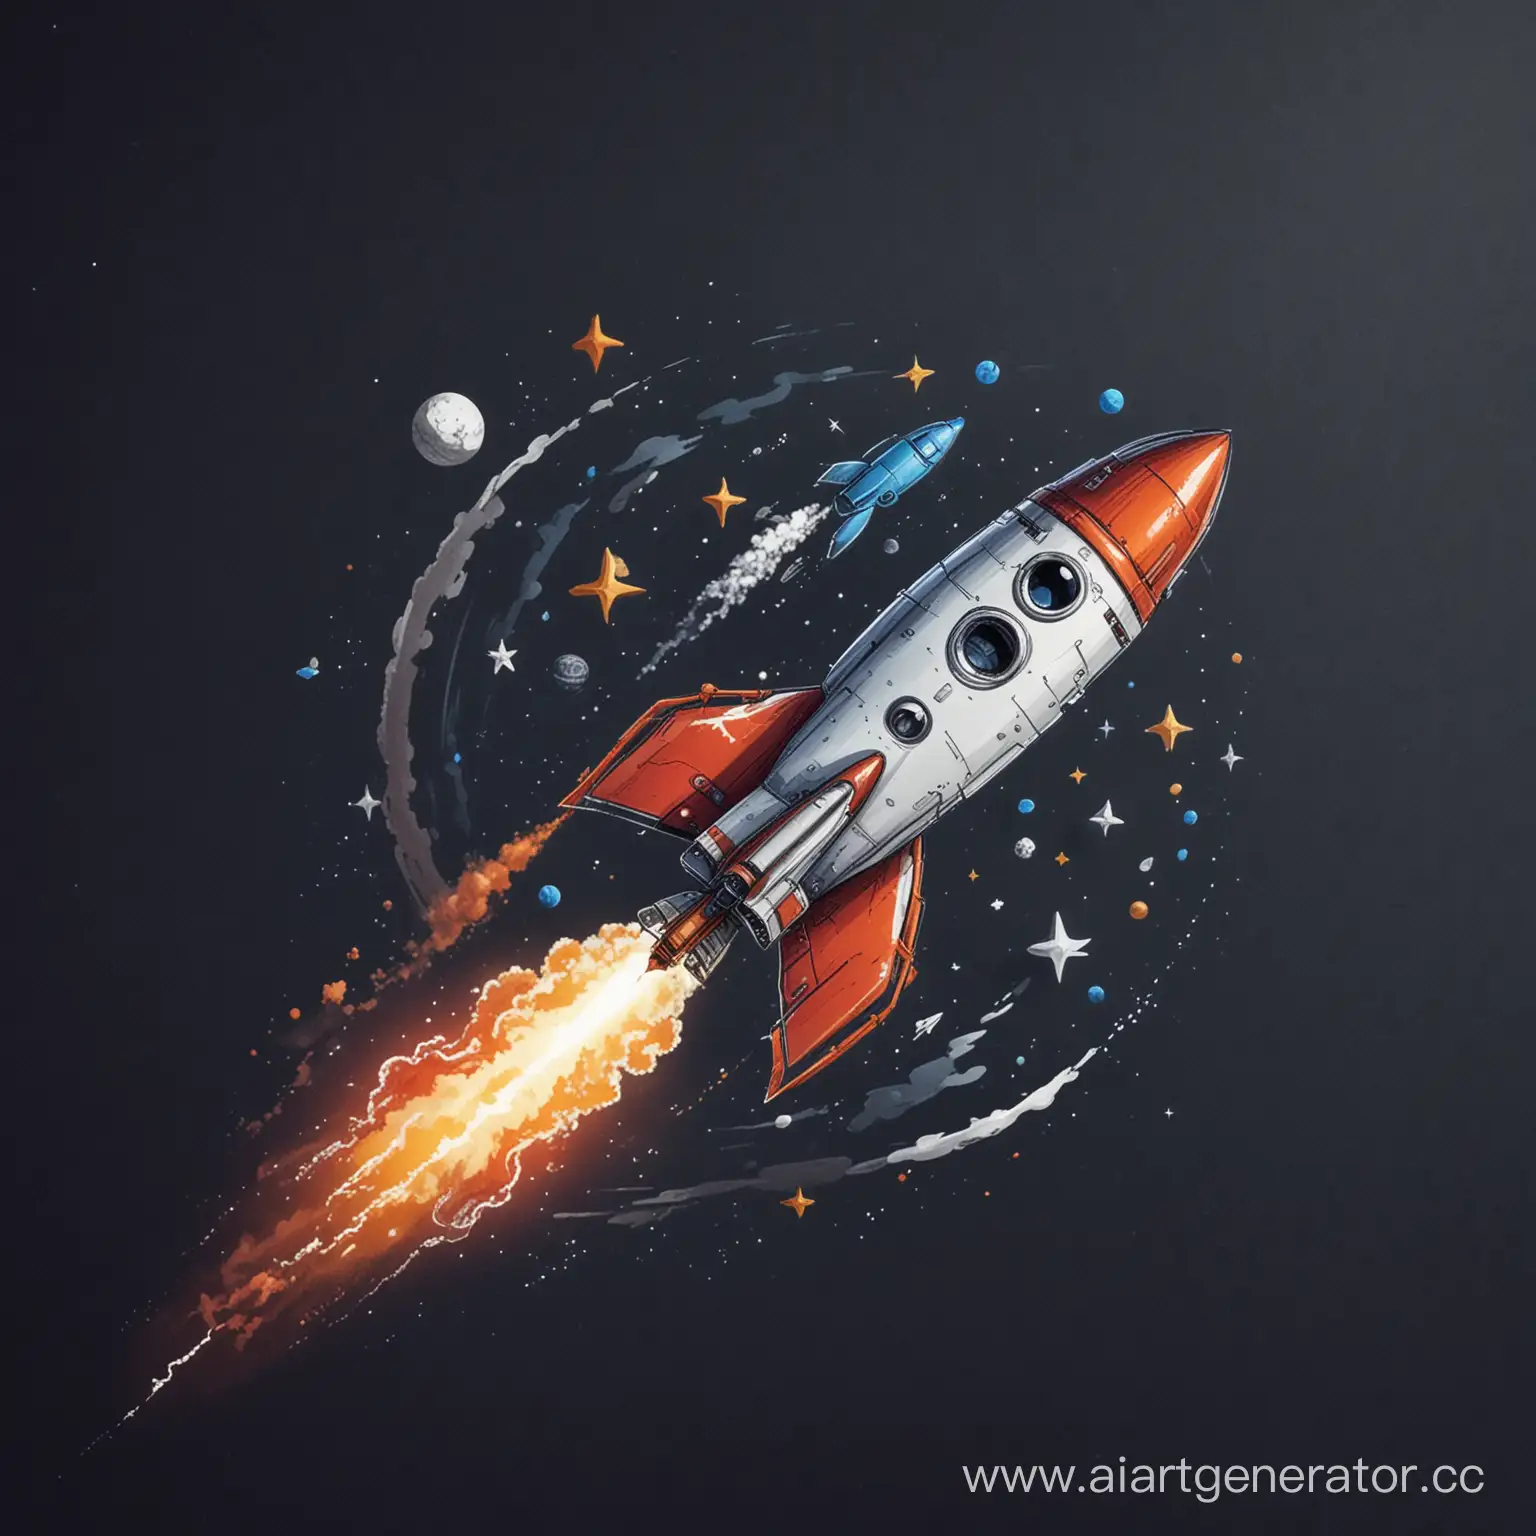 Нарисуй ракету взлетающую в космос, на борту которой нарисован логотип Битрикс24